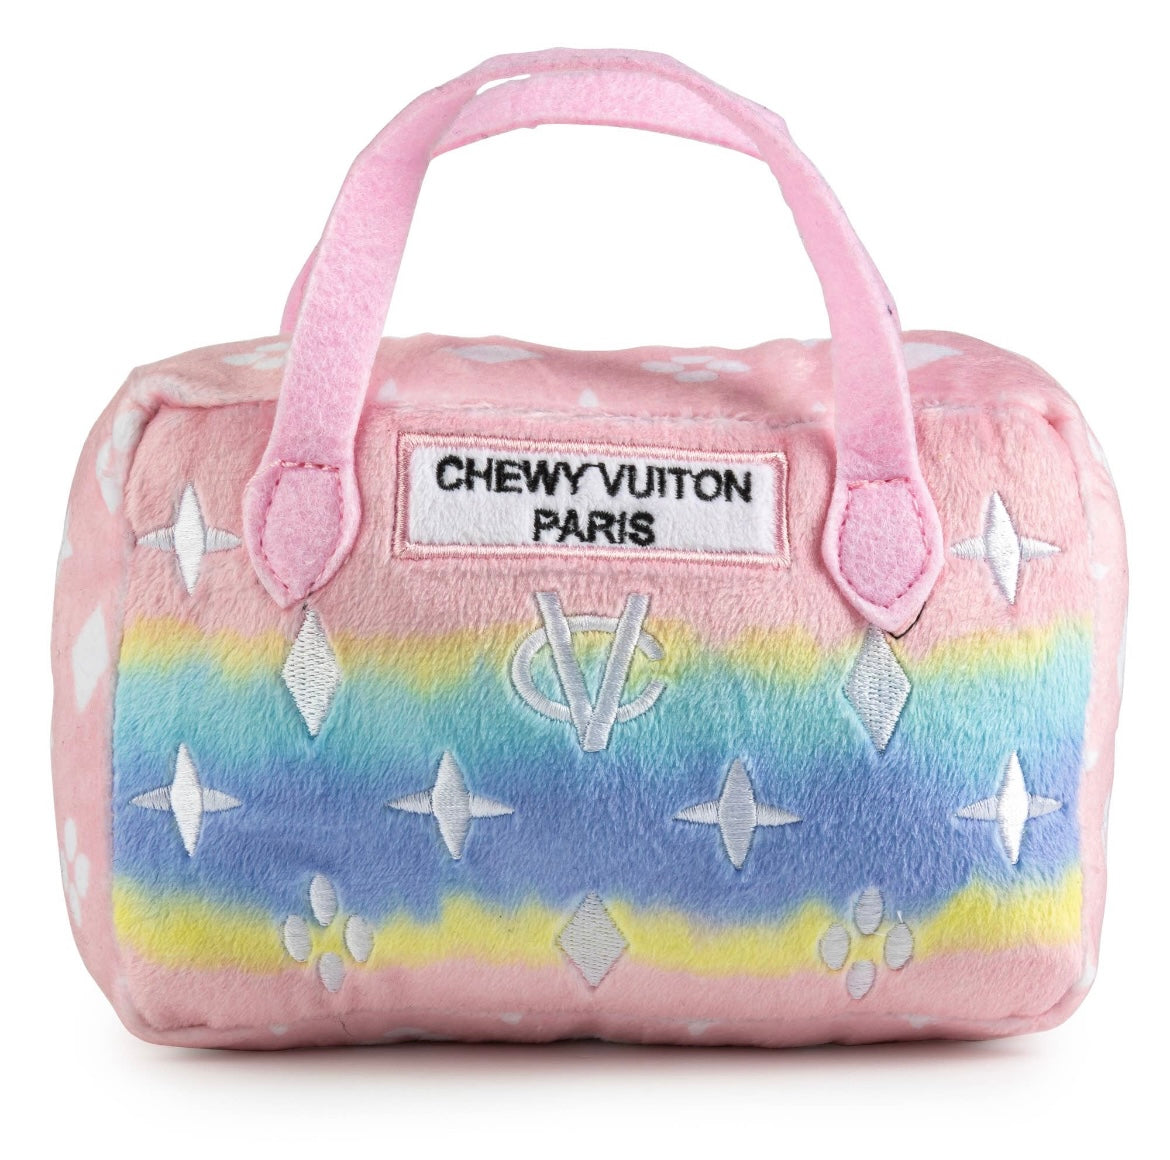 Chewy Vuiton Paris Pink Purse Dog Toy